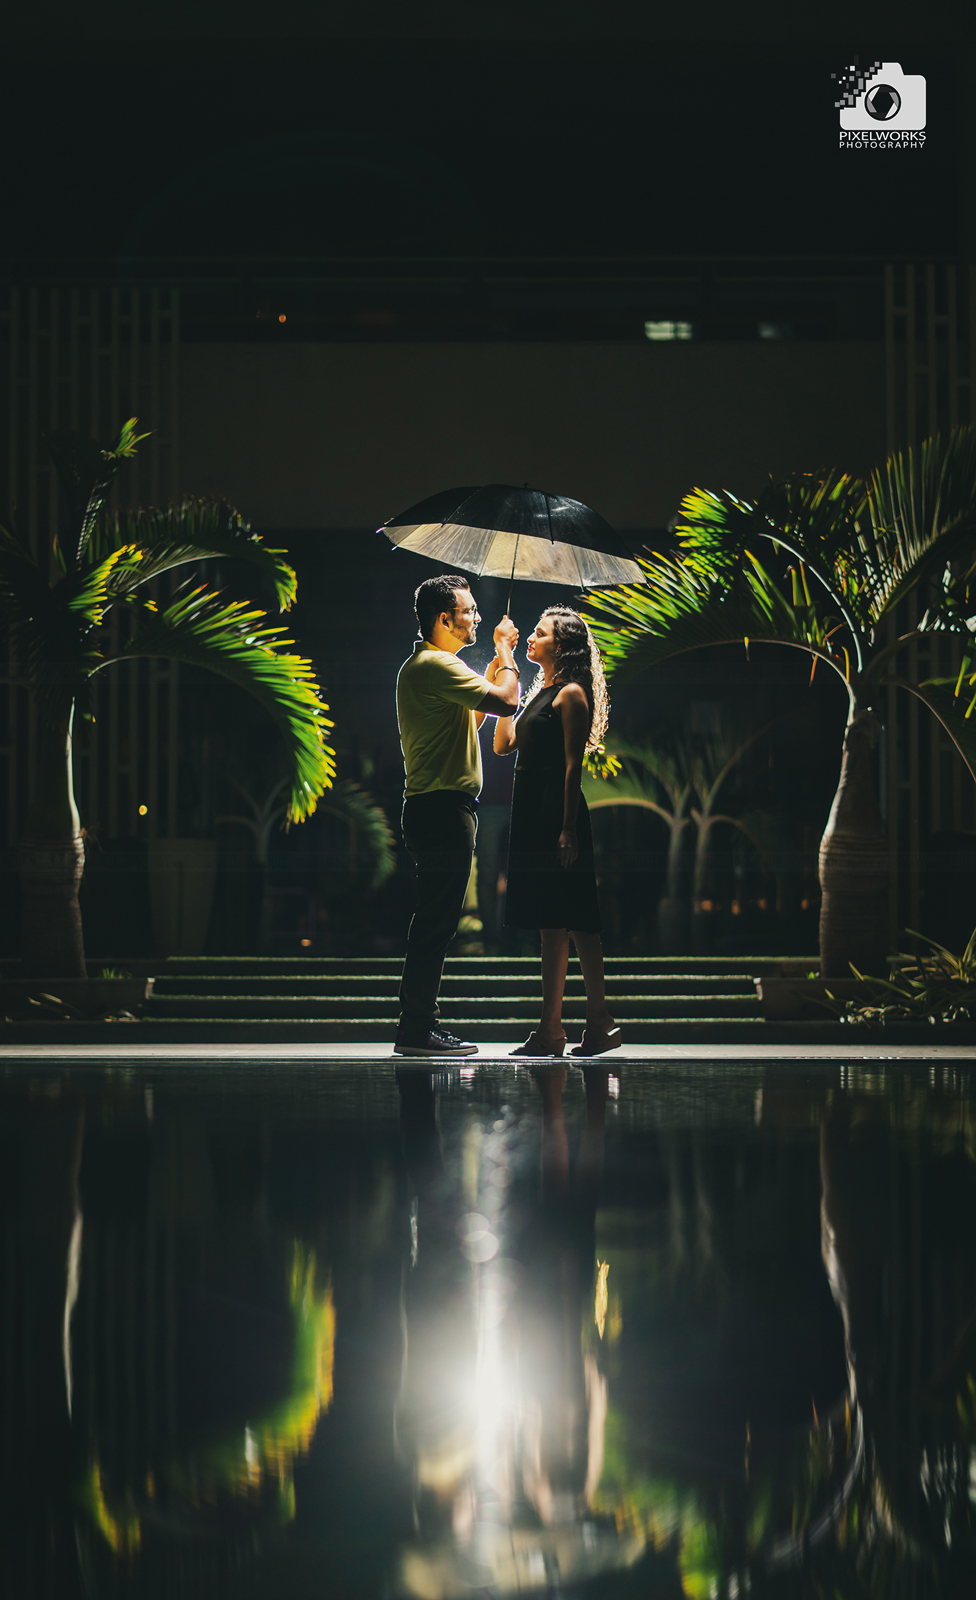 Pre wedding shoot ideas Night and umbrella 